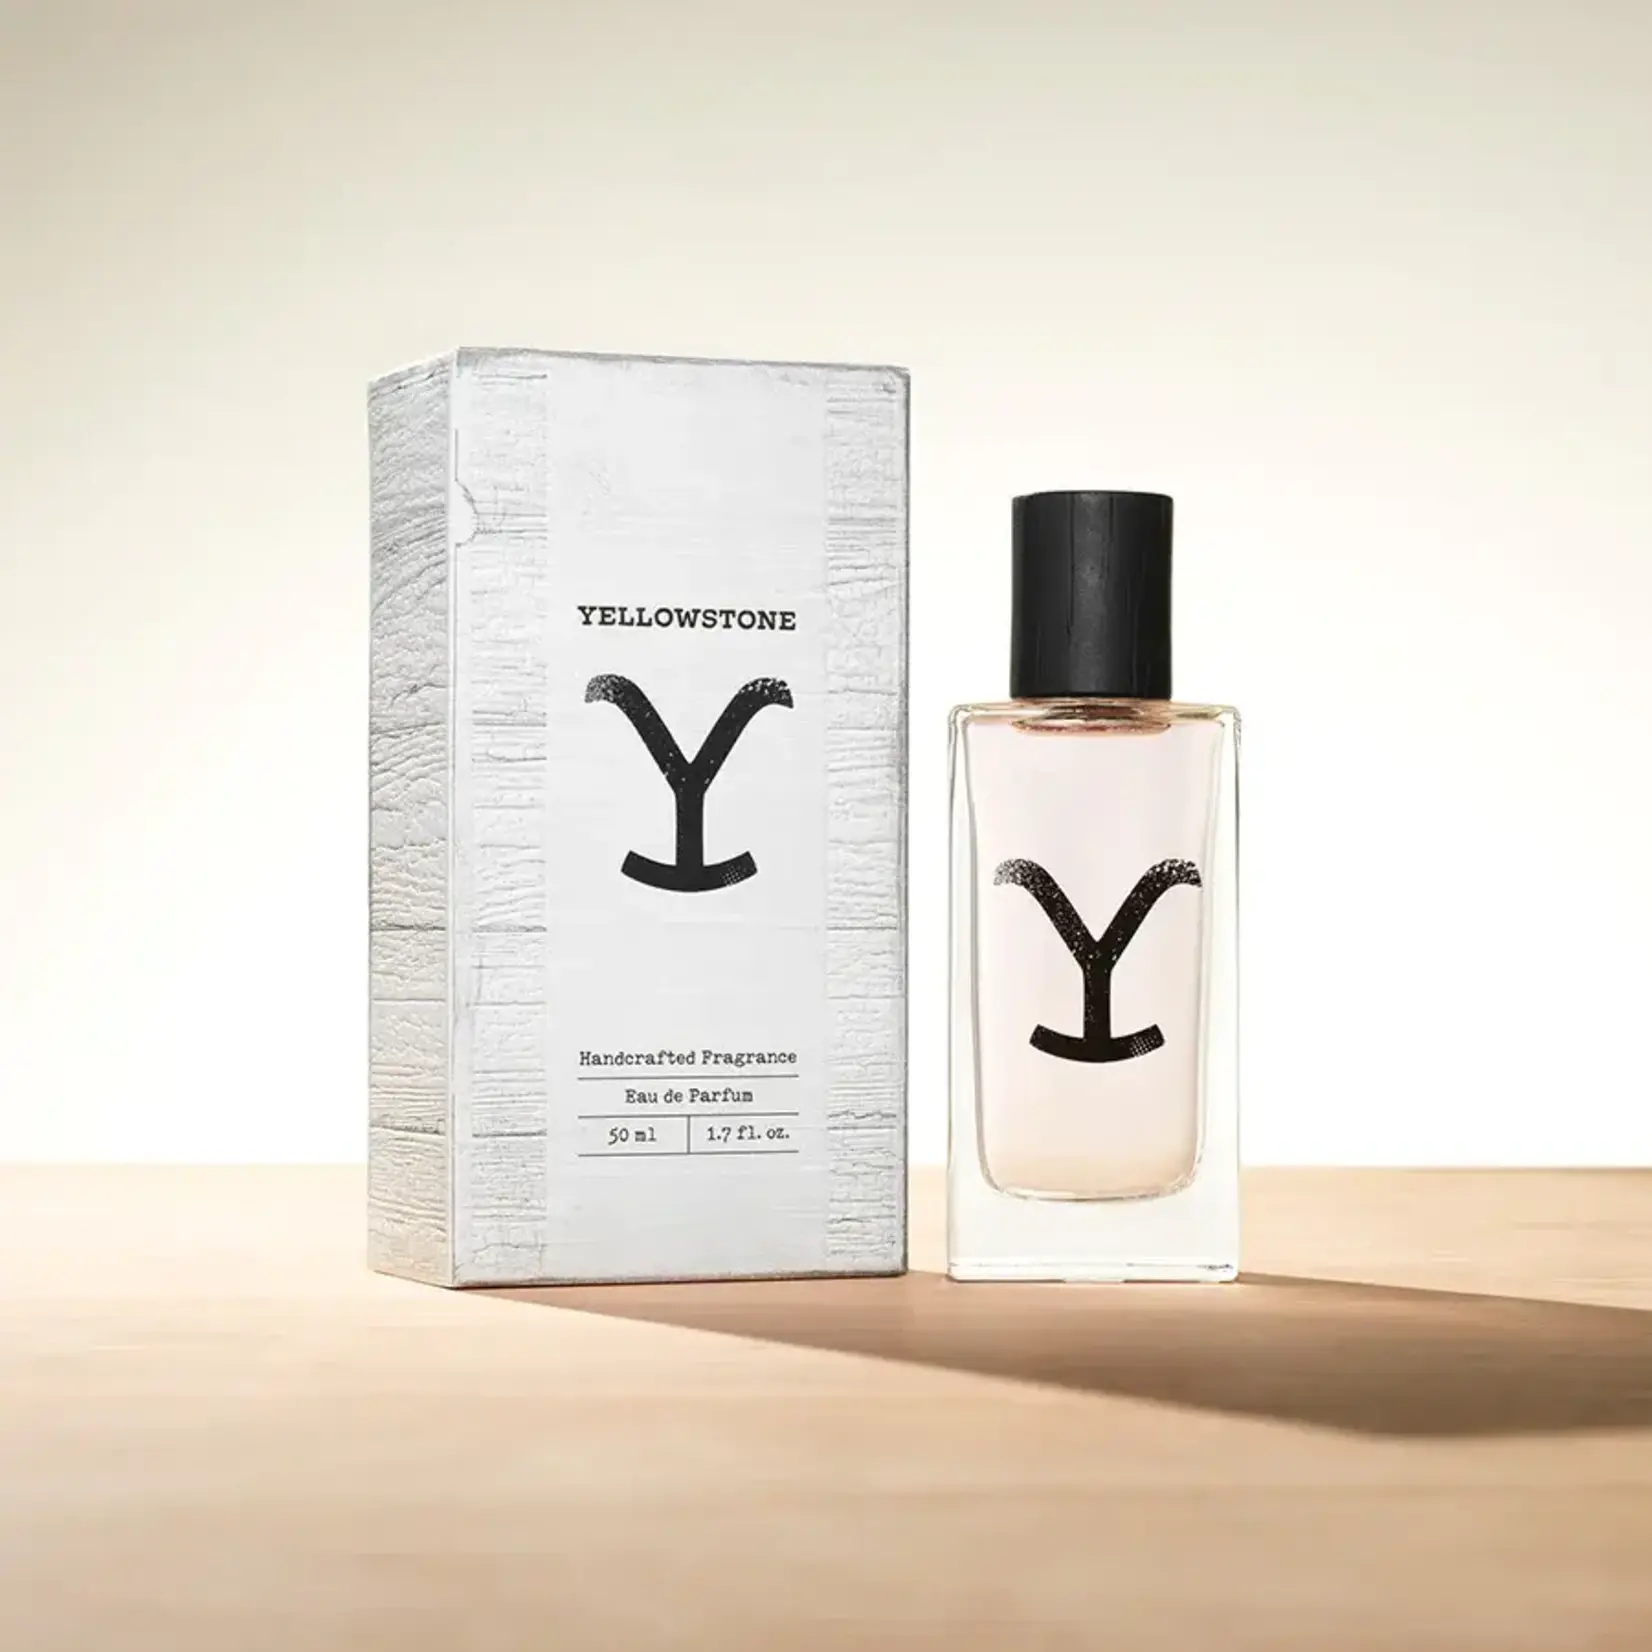 TRU Womens "Y" Yellowstone Perfume